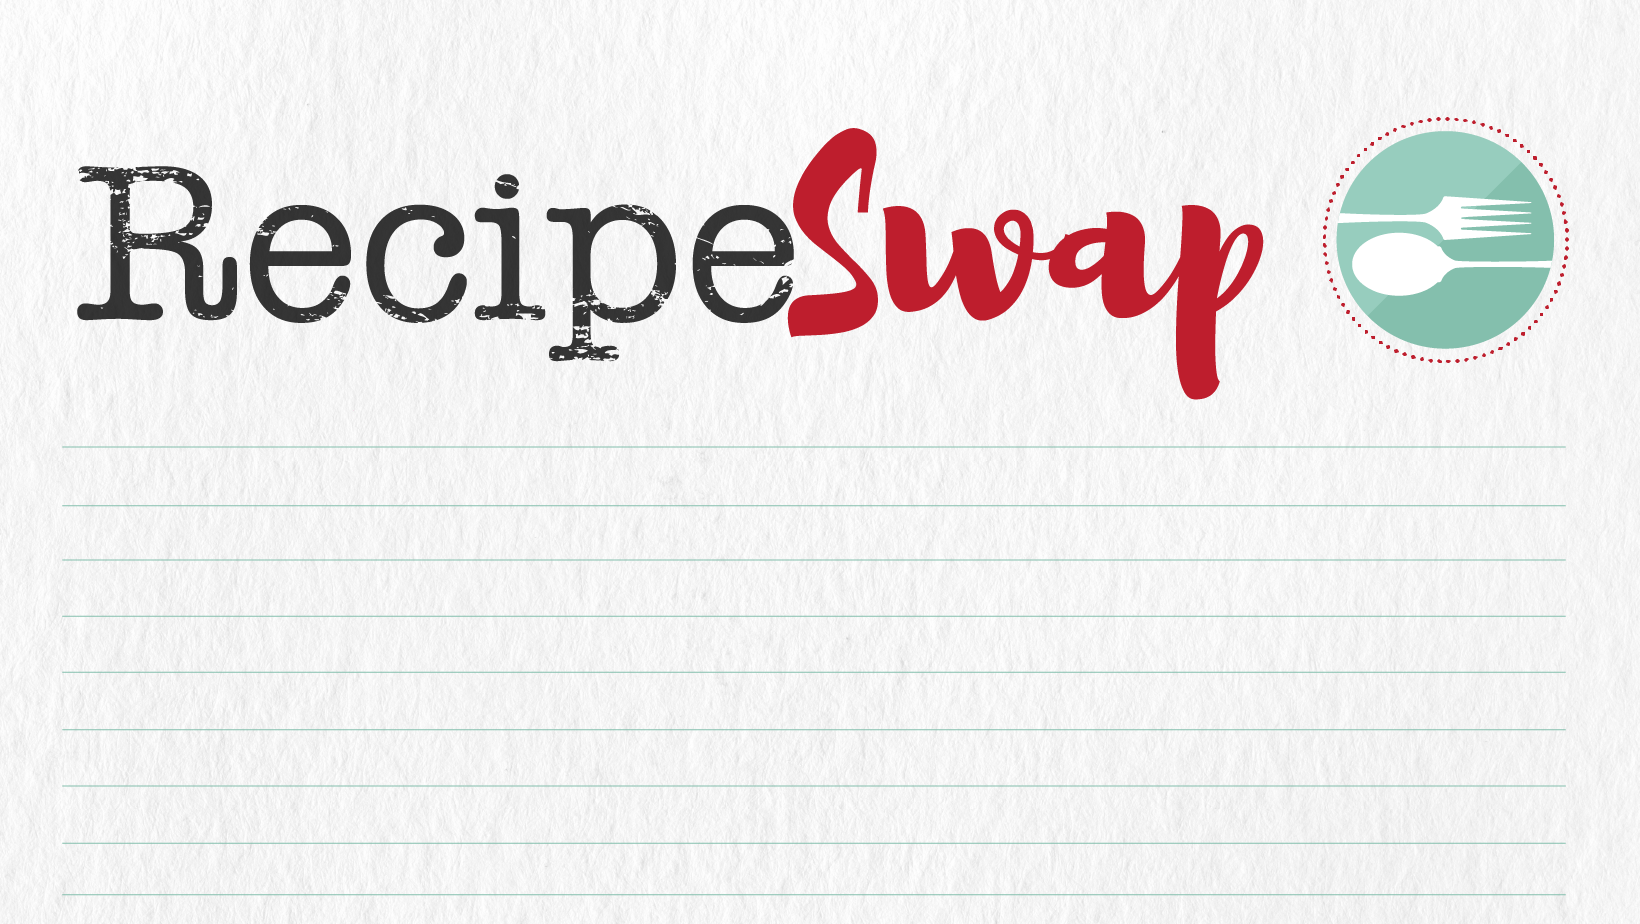 Recipe Swap